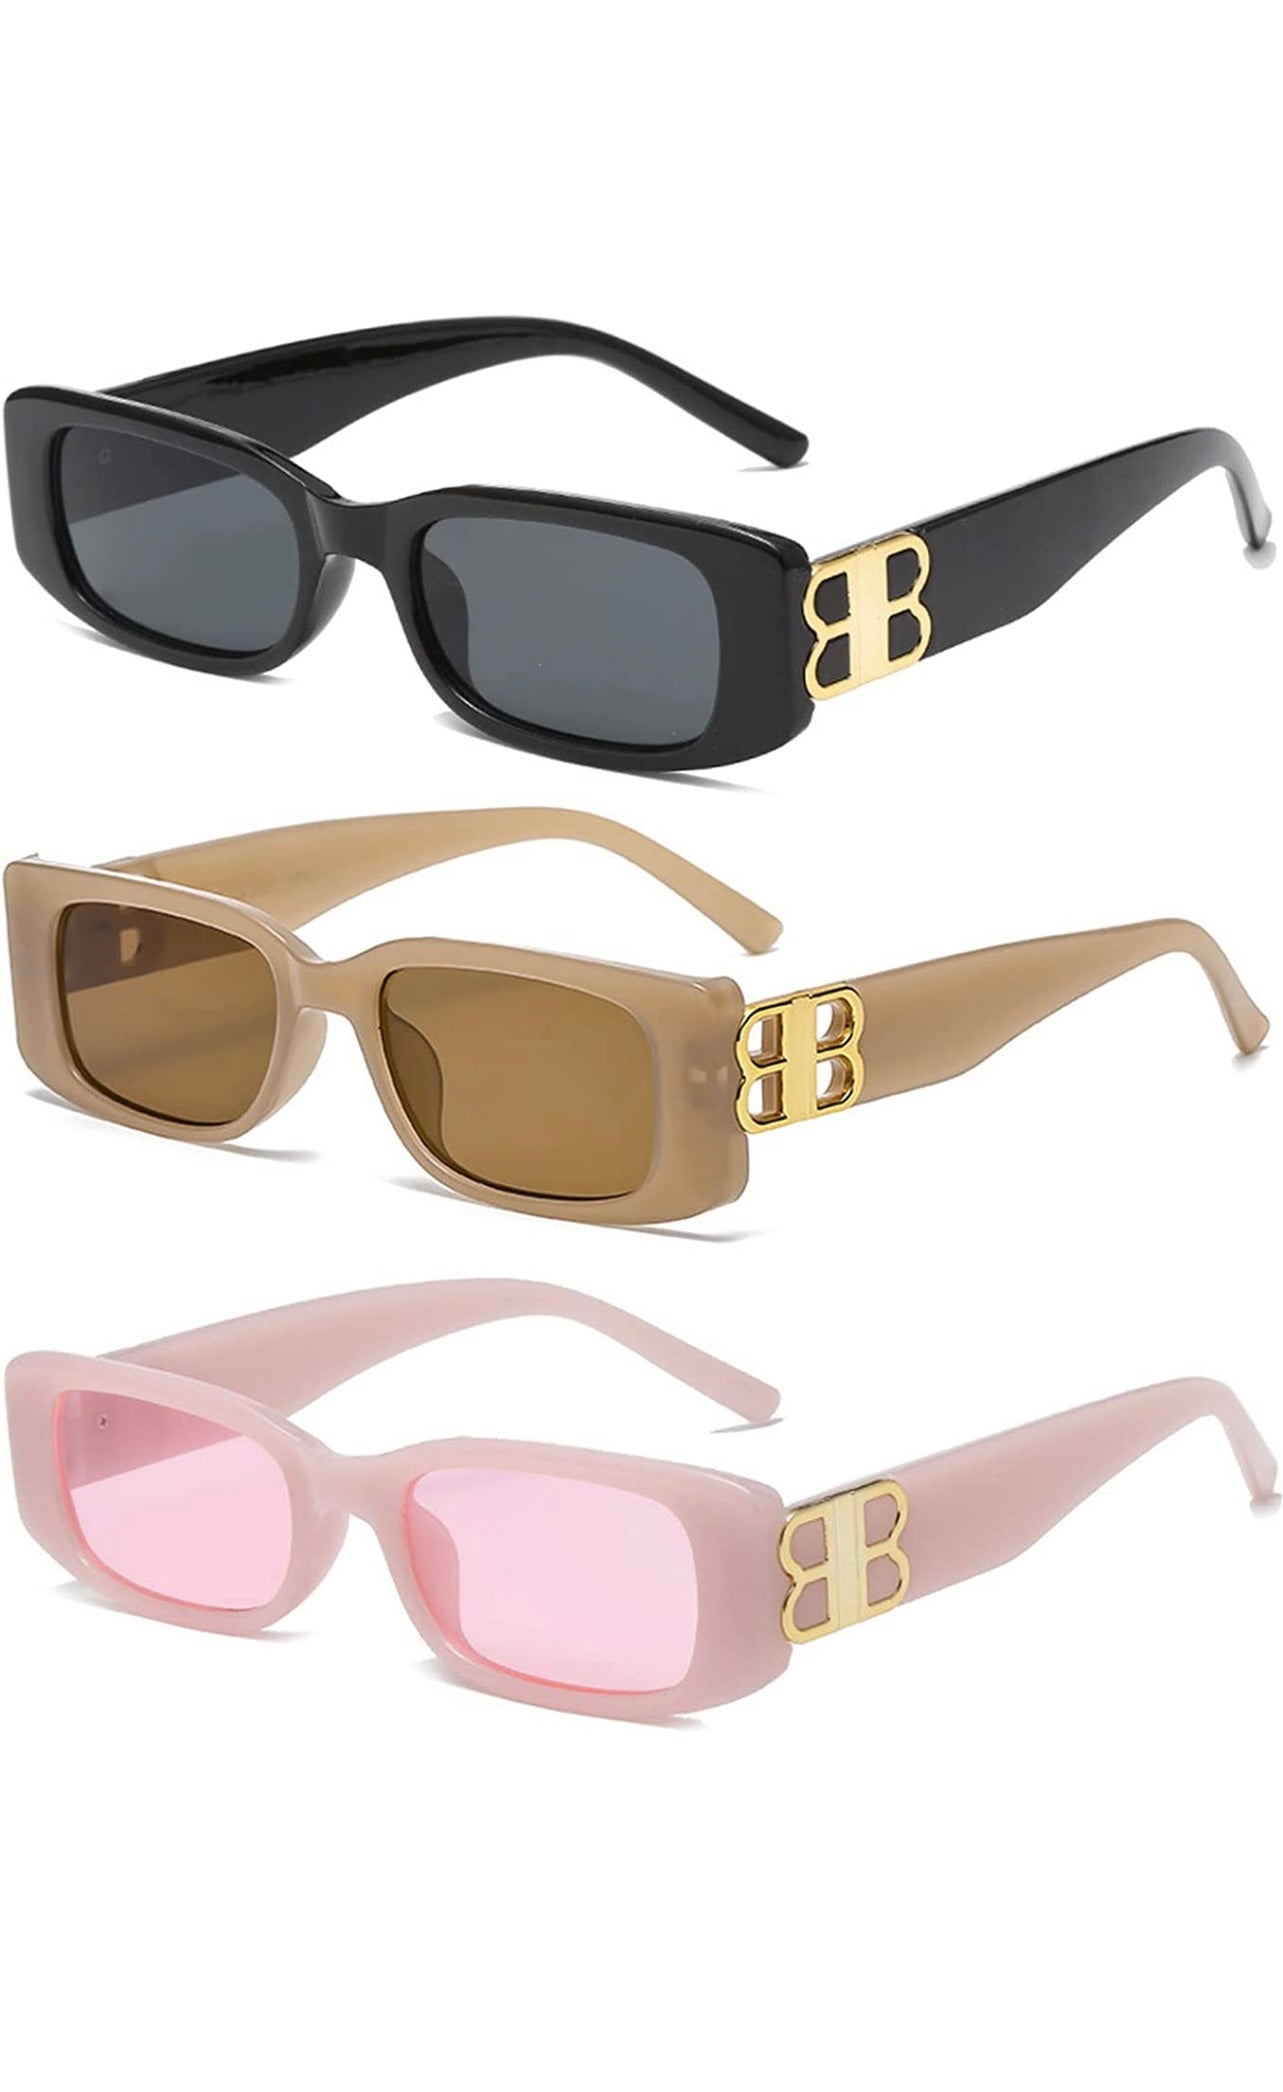 Designer inspired shades 🕶️